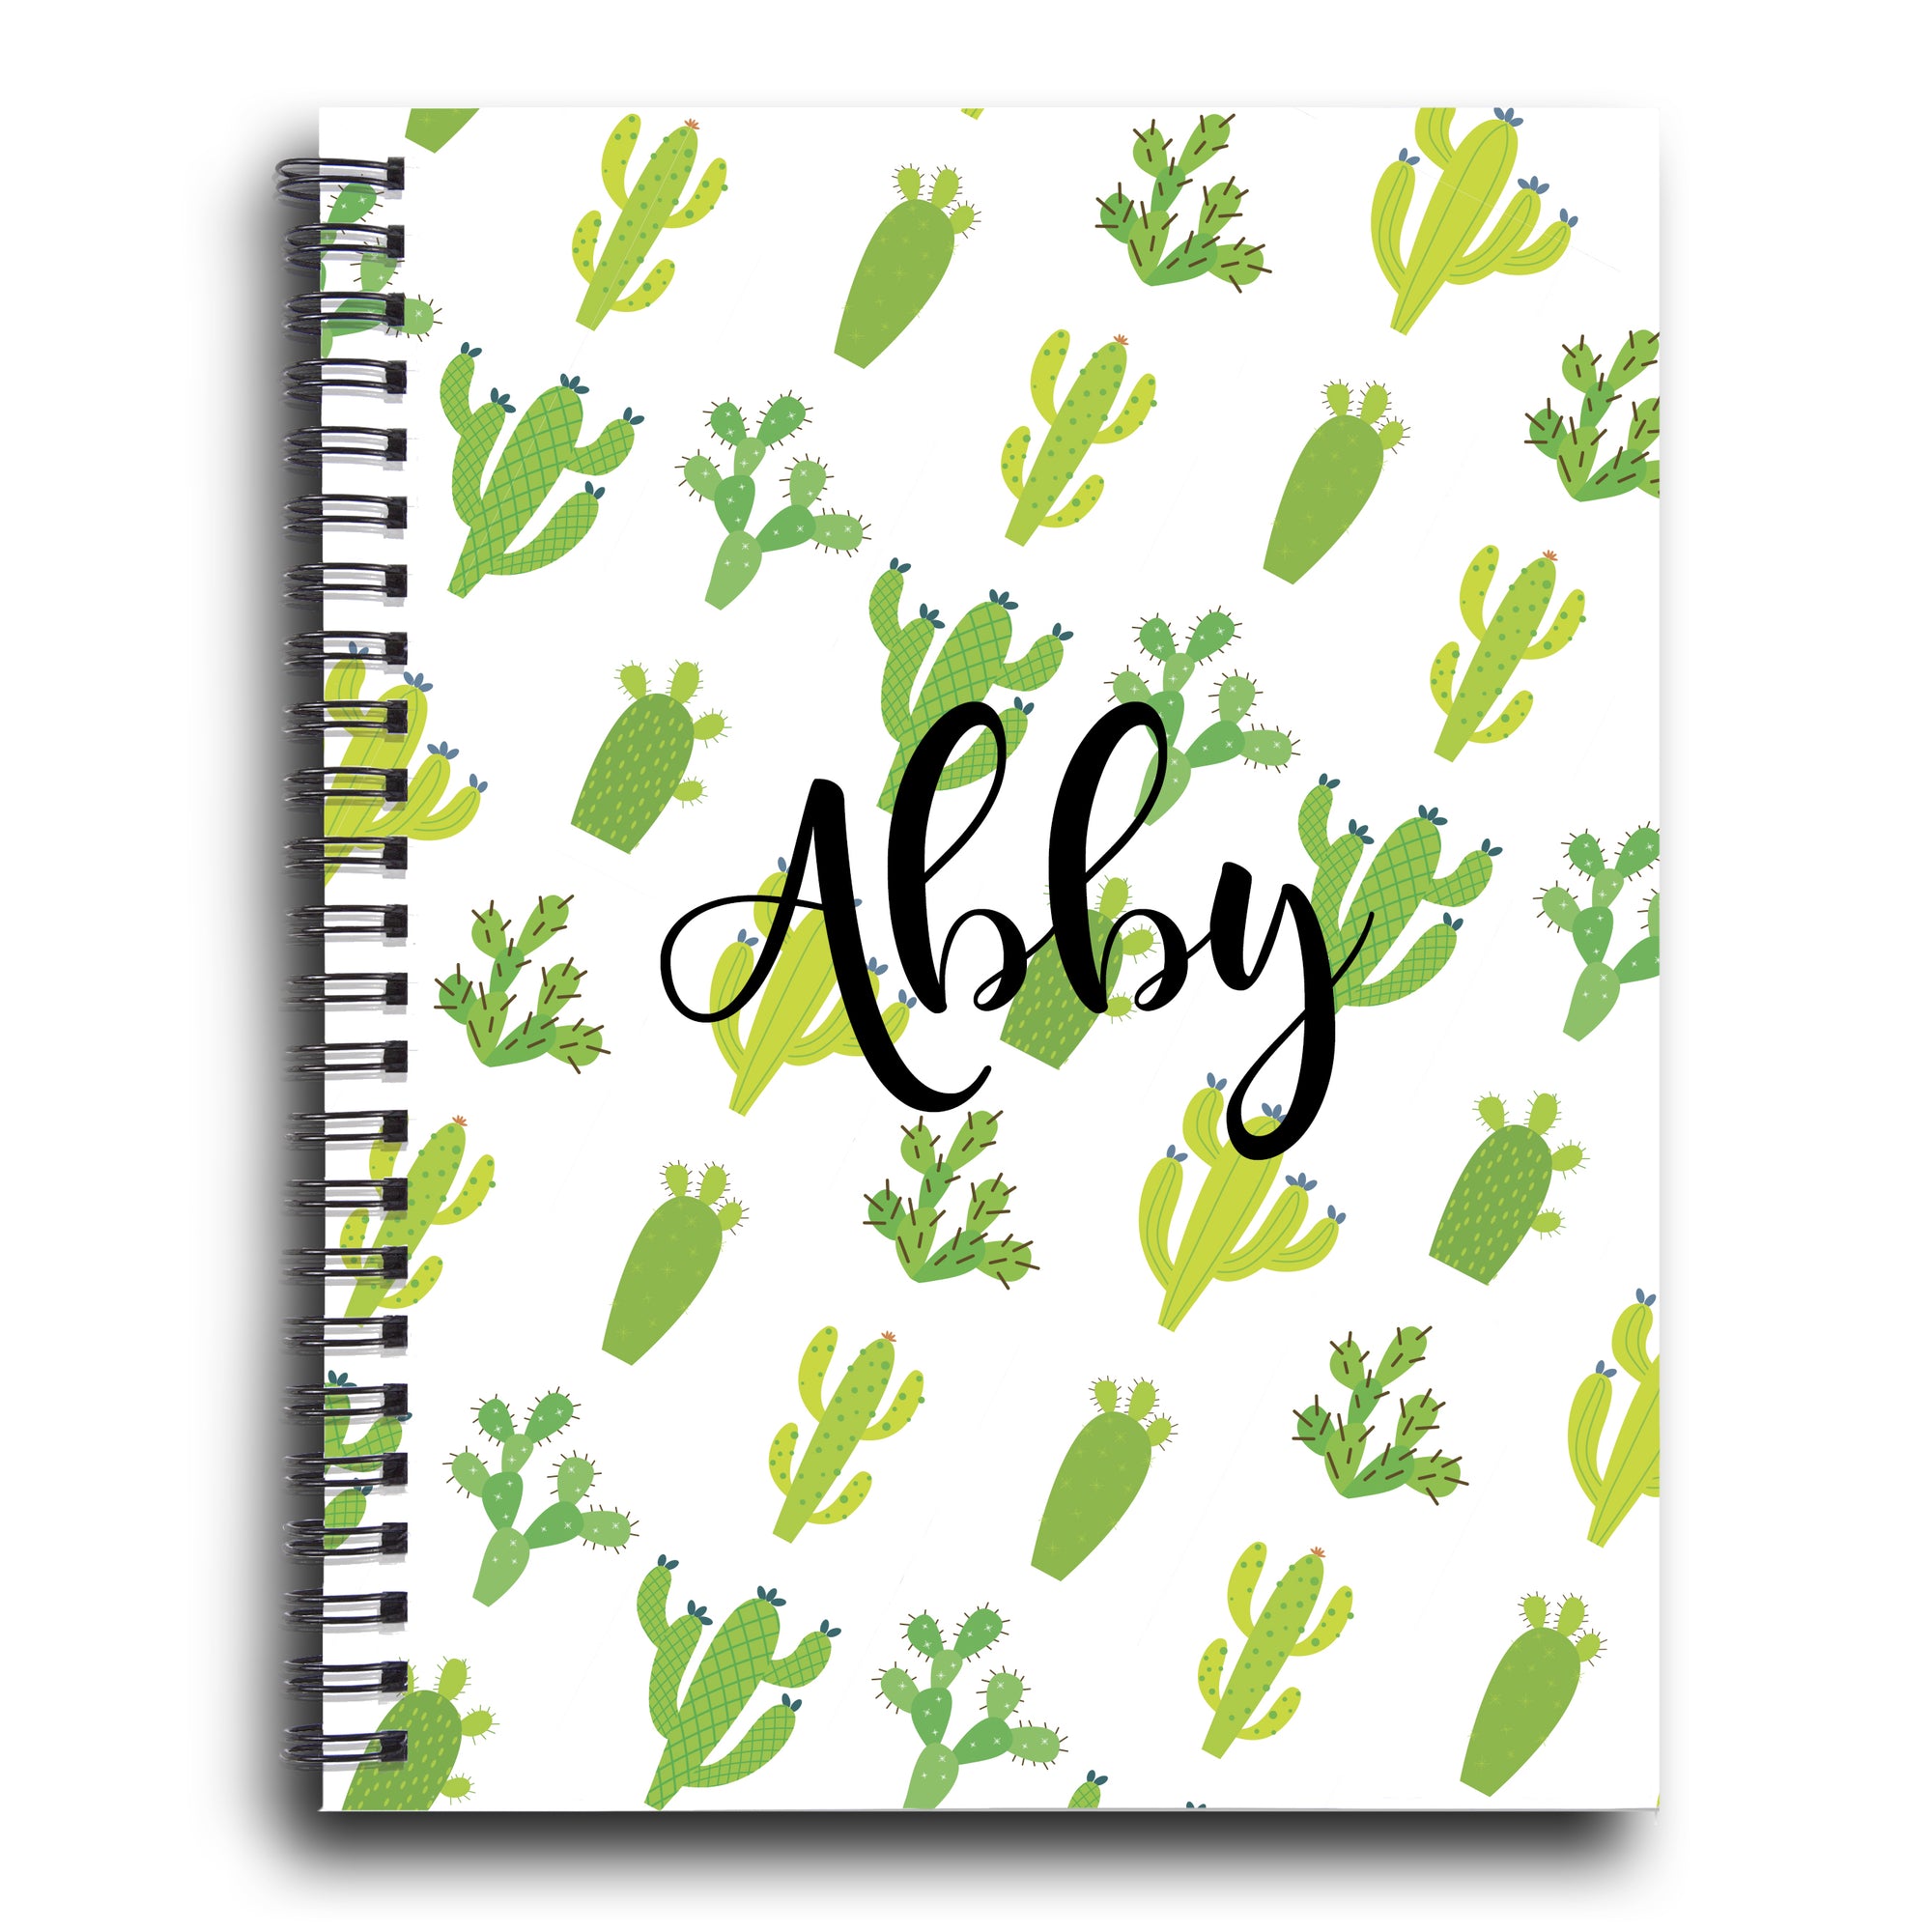 Cactus Spiral Notebook